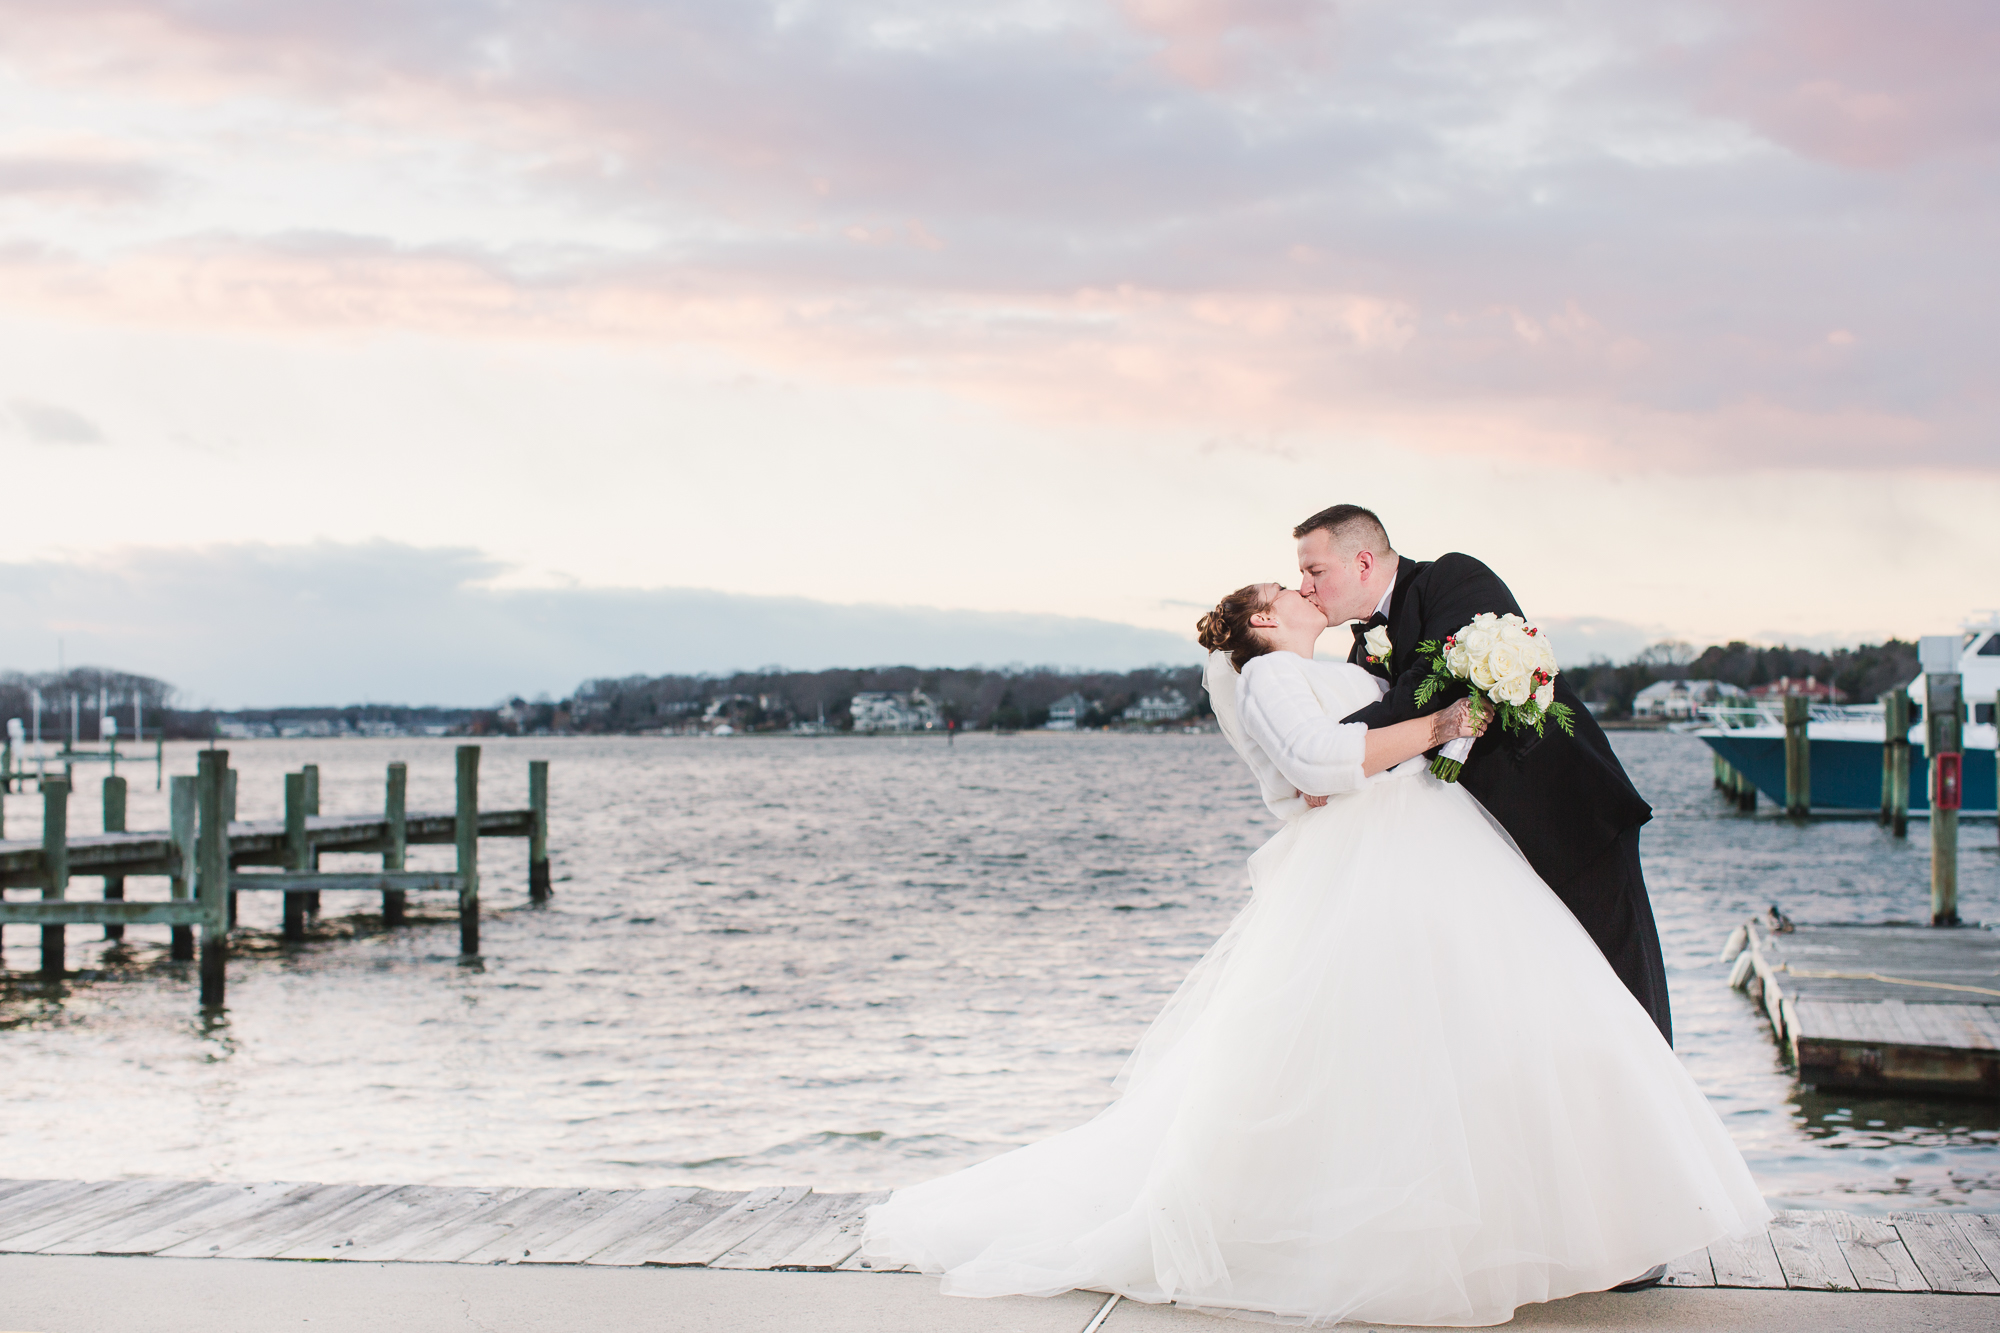 Lauren & Craig's Beautiful Winter Wedding at Clark's Landing Yacht Club of Point Pleasant, NJ